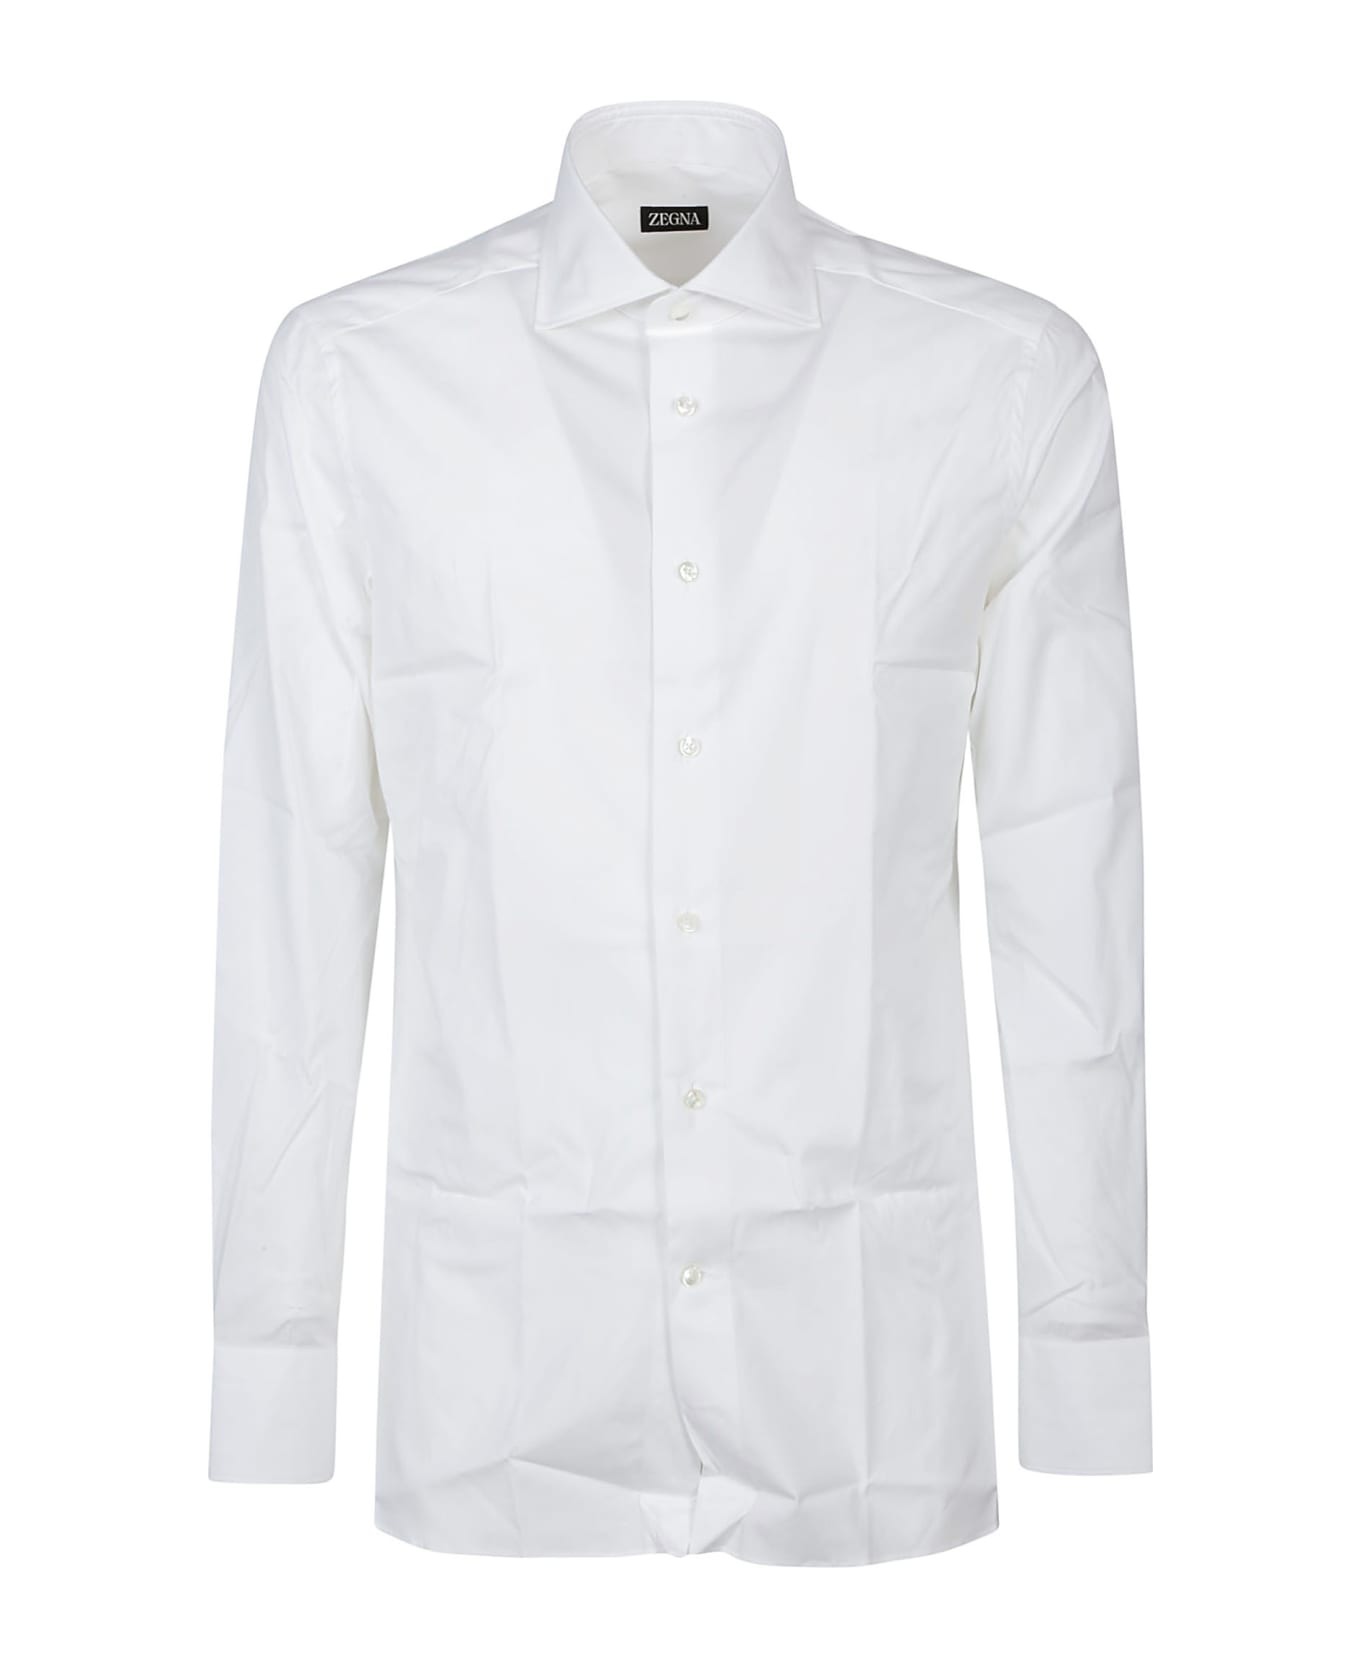 Zegna Long Sleeve Shirt - Bianco シャツ